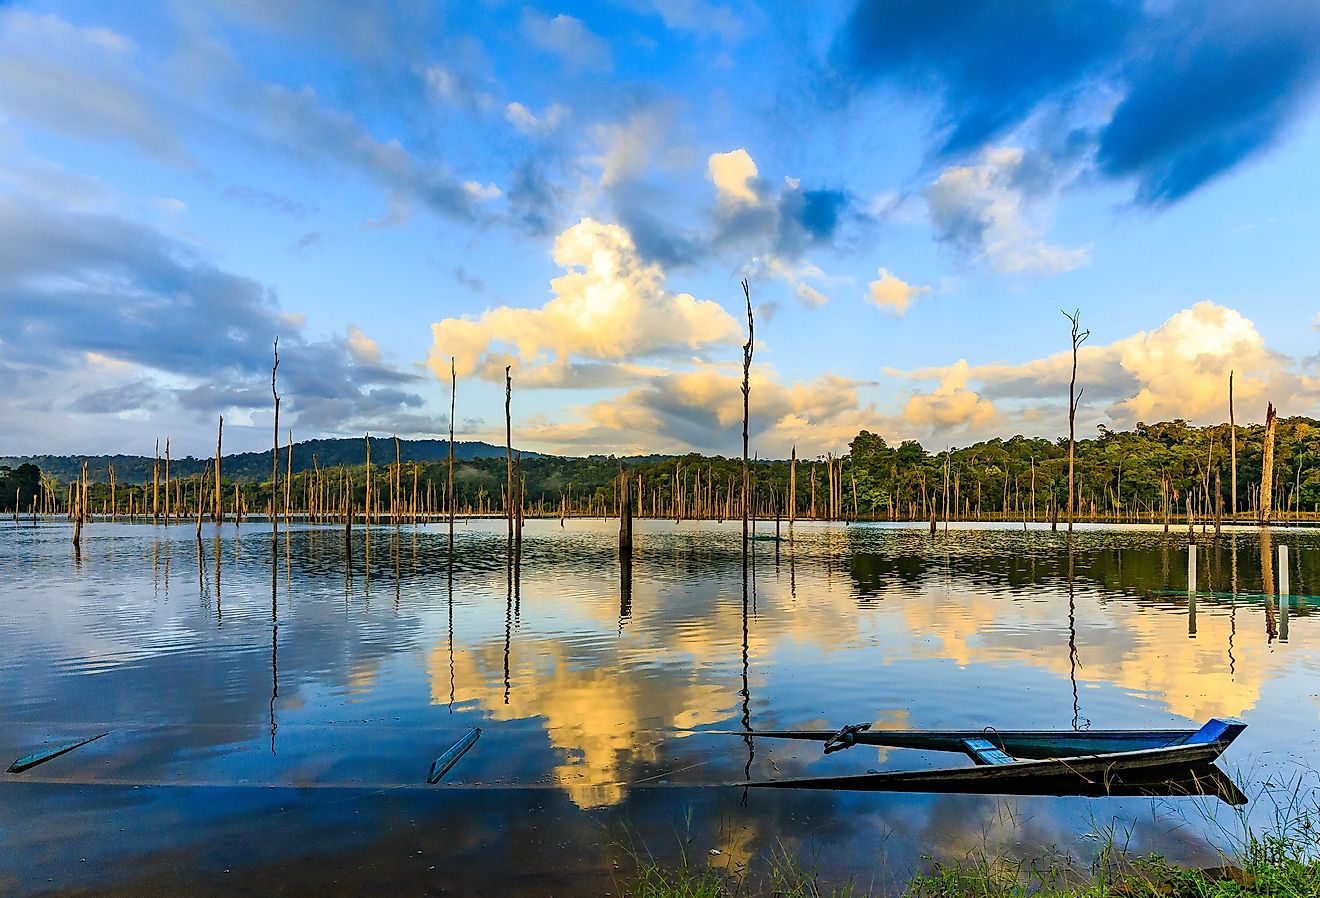 Lake Brokopondo in Suriname. Sunken canoe and reflection of sky in water. Image credit Rene via Shutterstock.